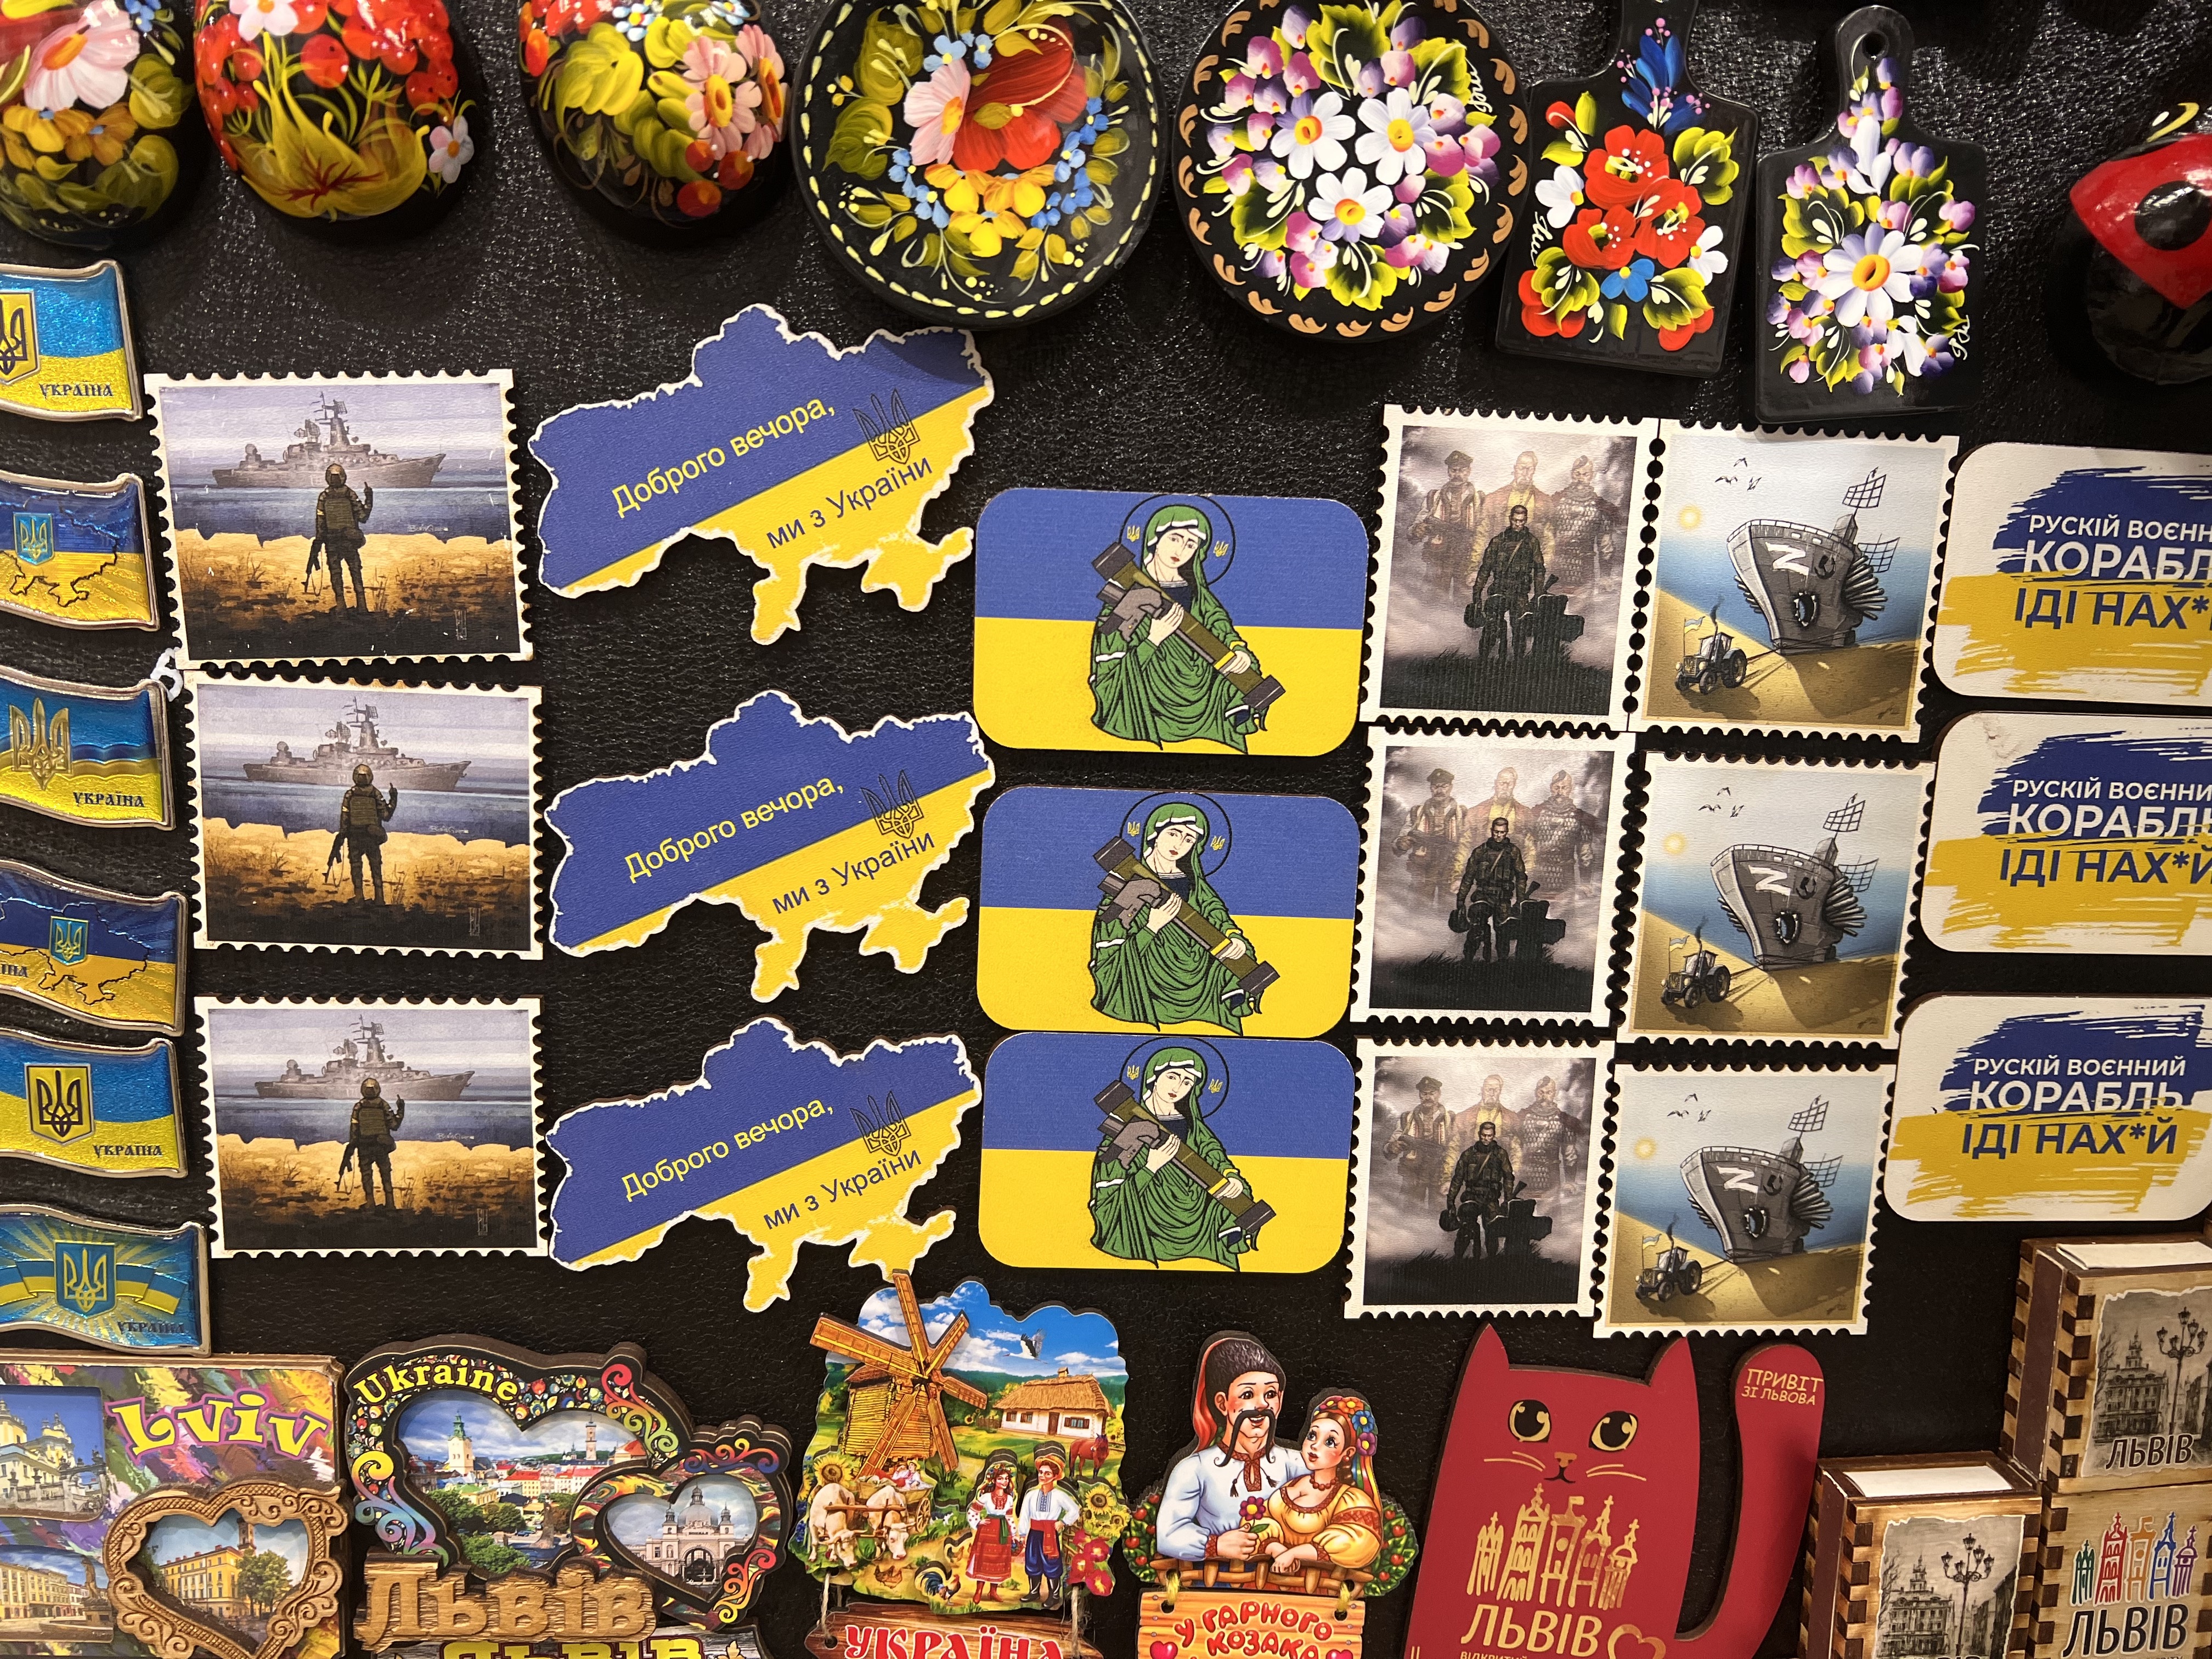 Magnets for sale in a Lviv tourist shop display Ukrainian pride. 